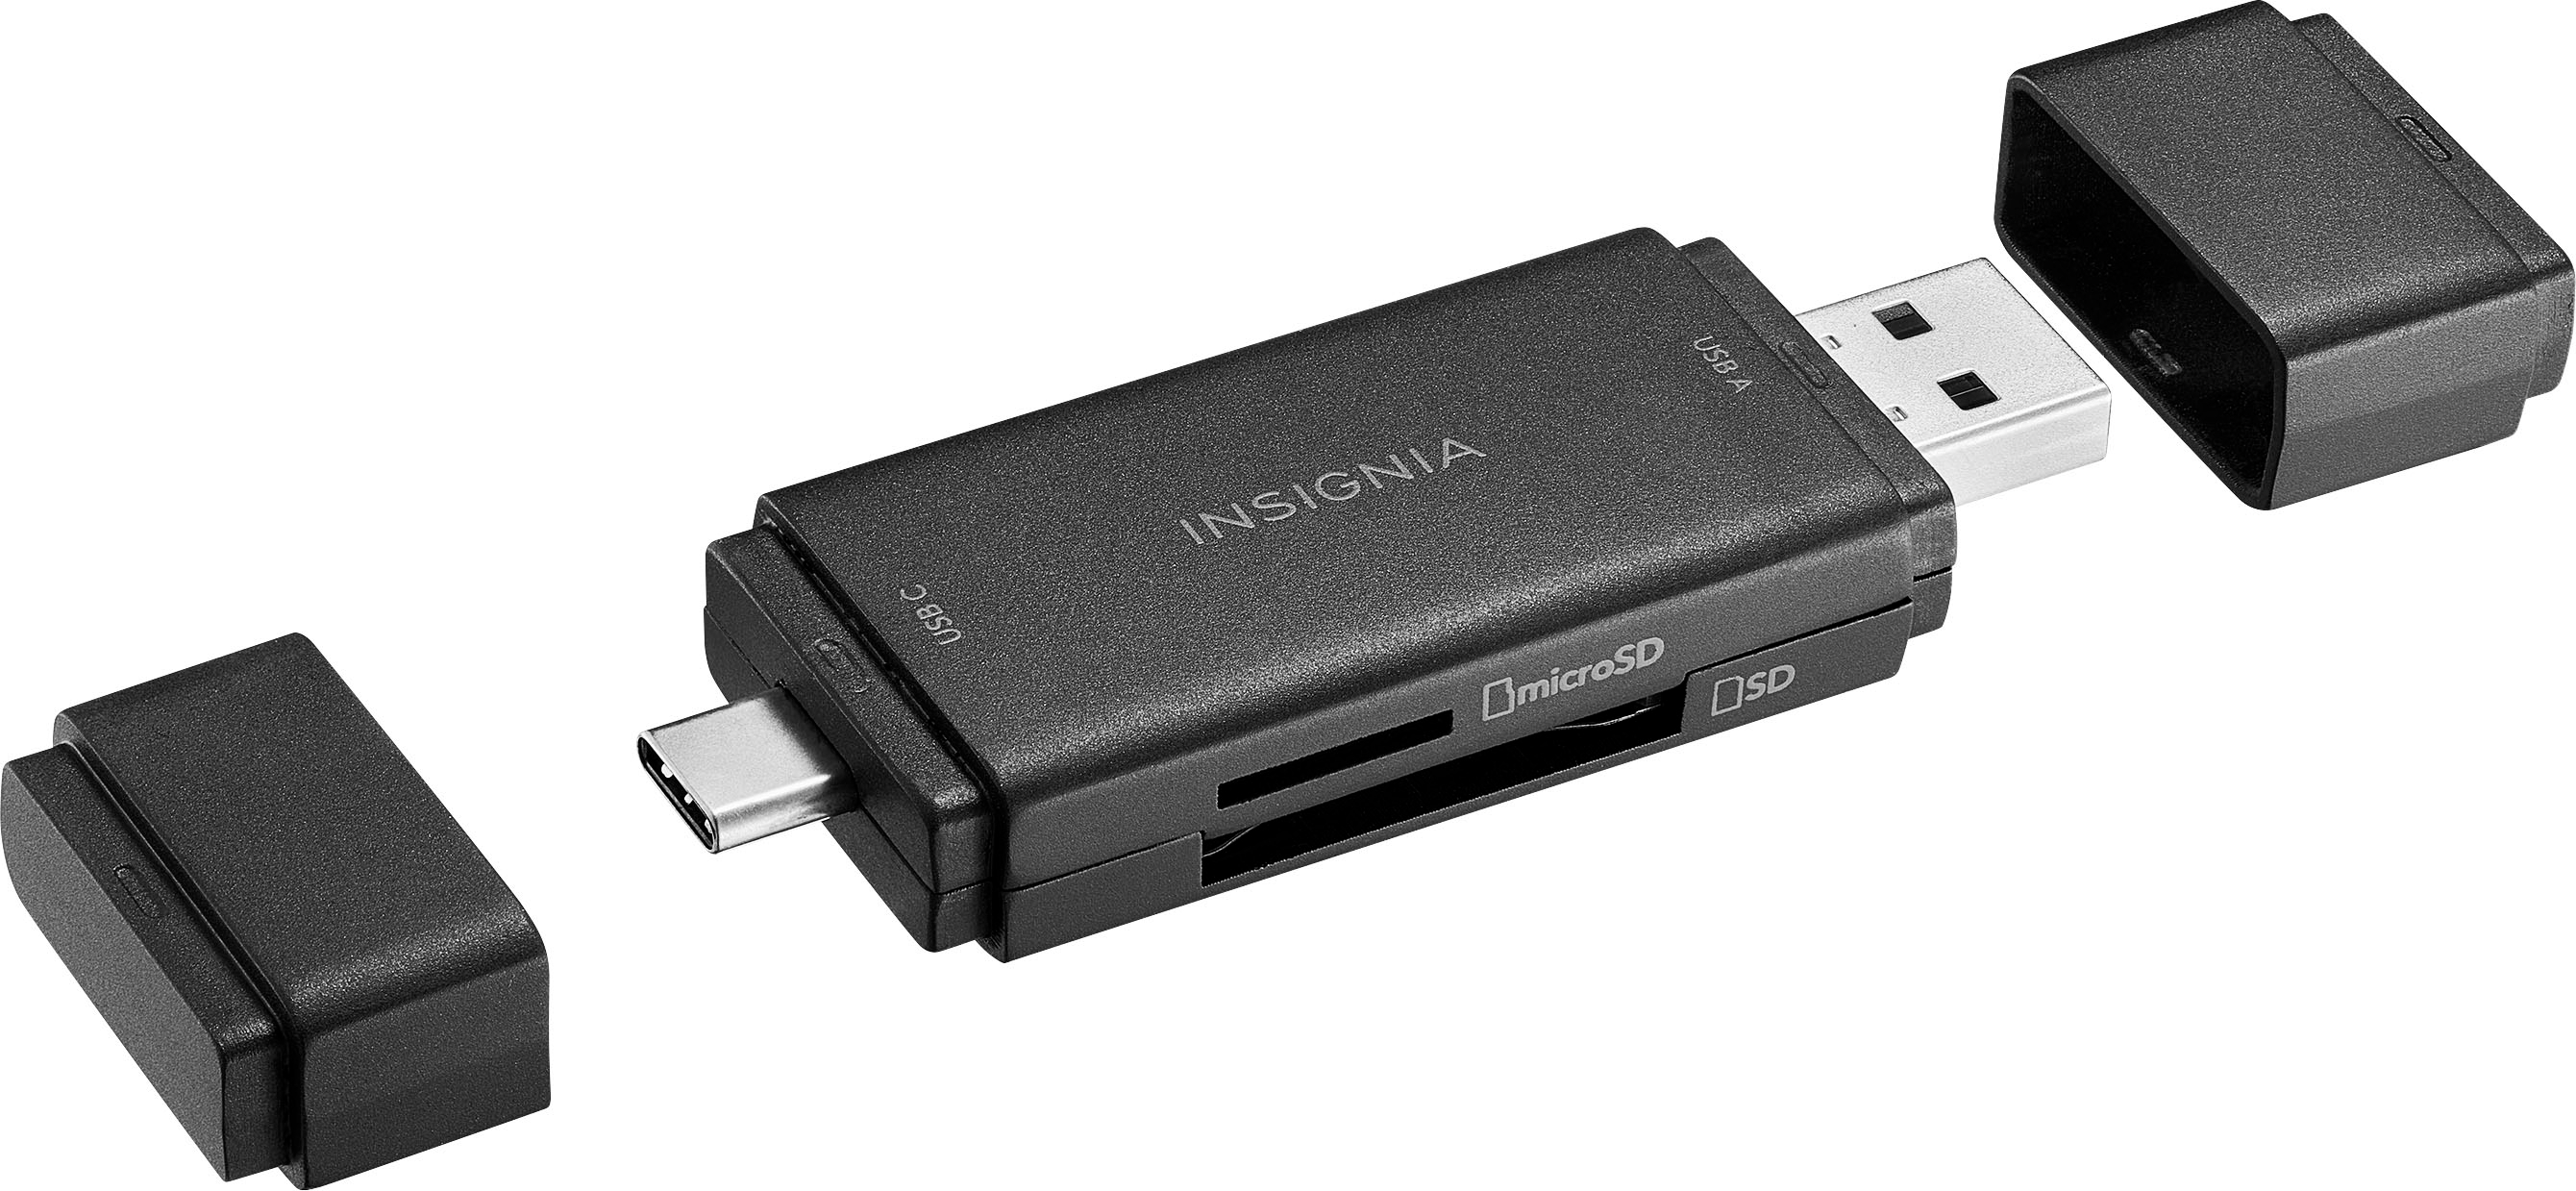 Insignia - Usb-c/usb 3.0 to SD and microSD Memory Card Reader - Black